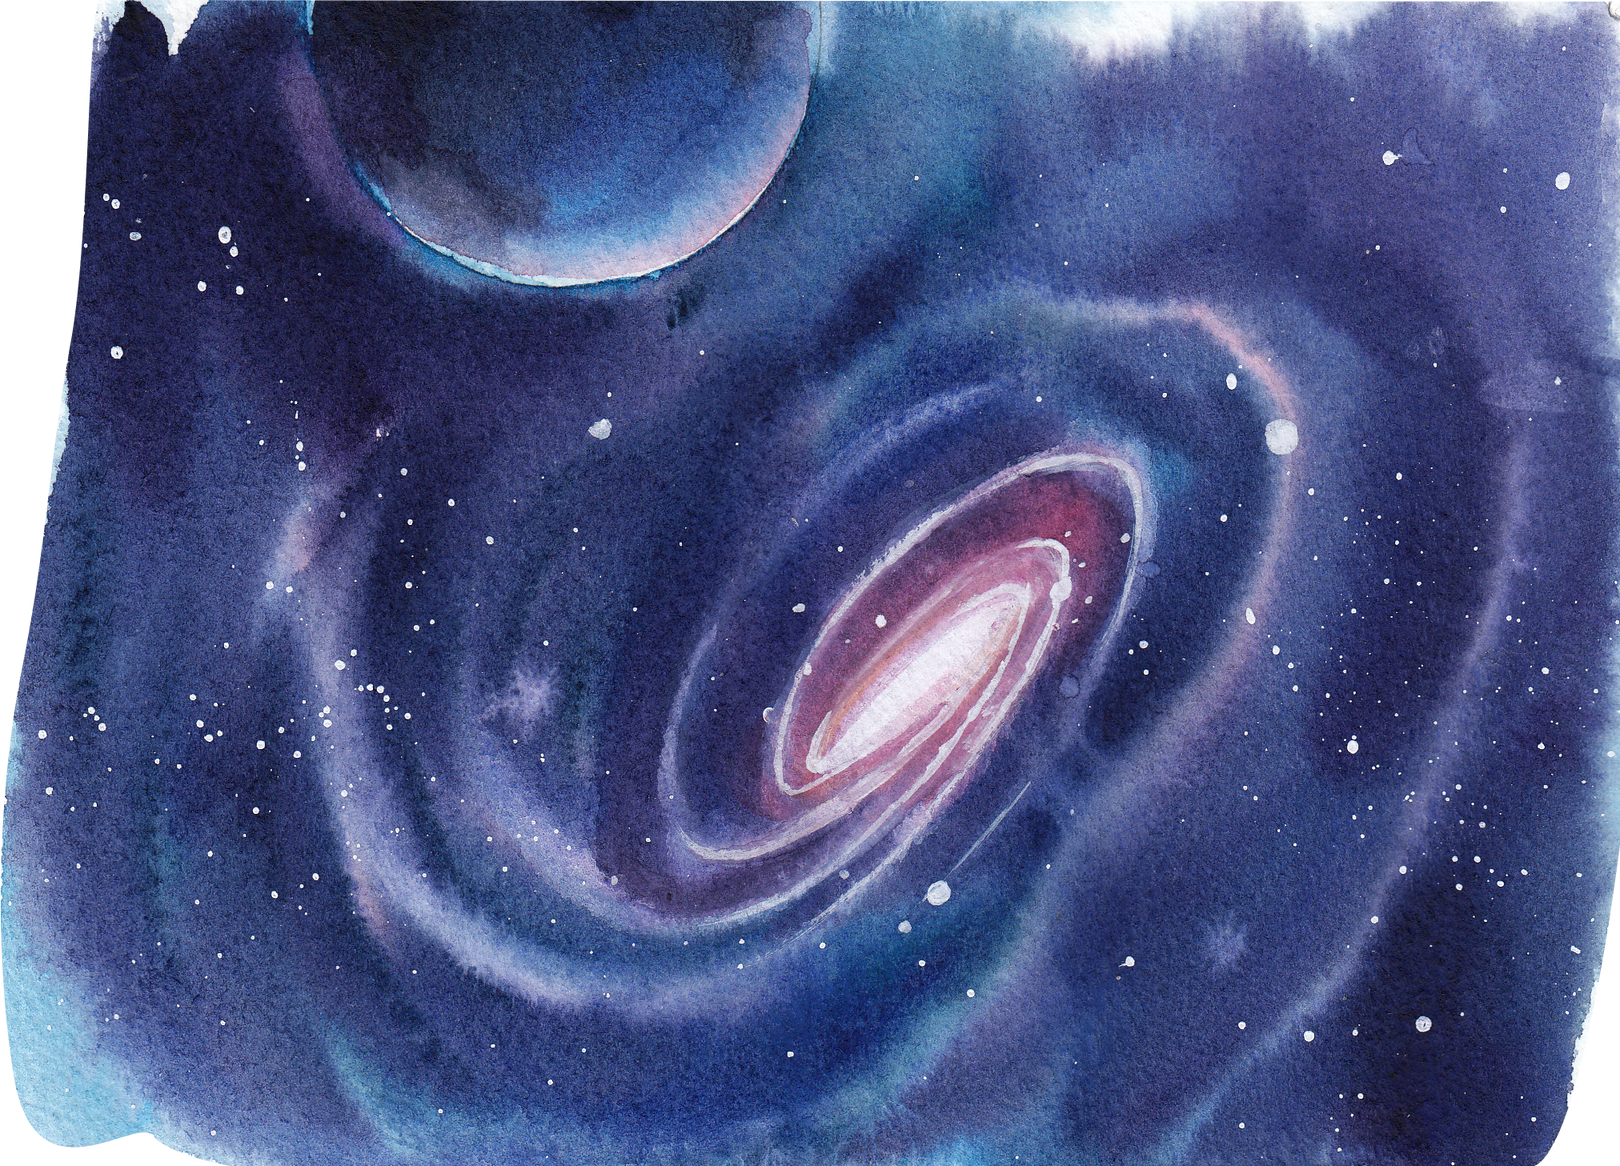 Watercolor Galaxy Background